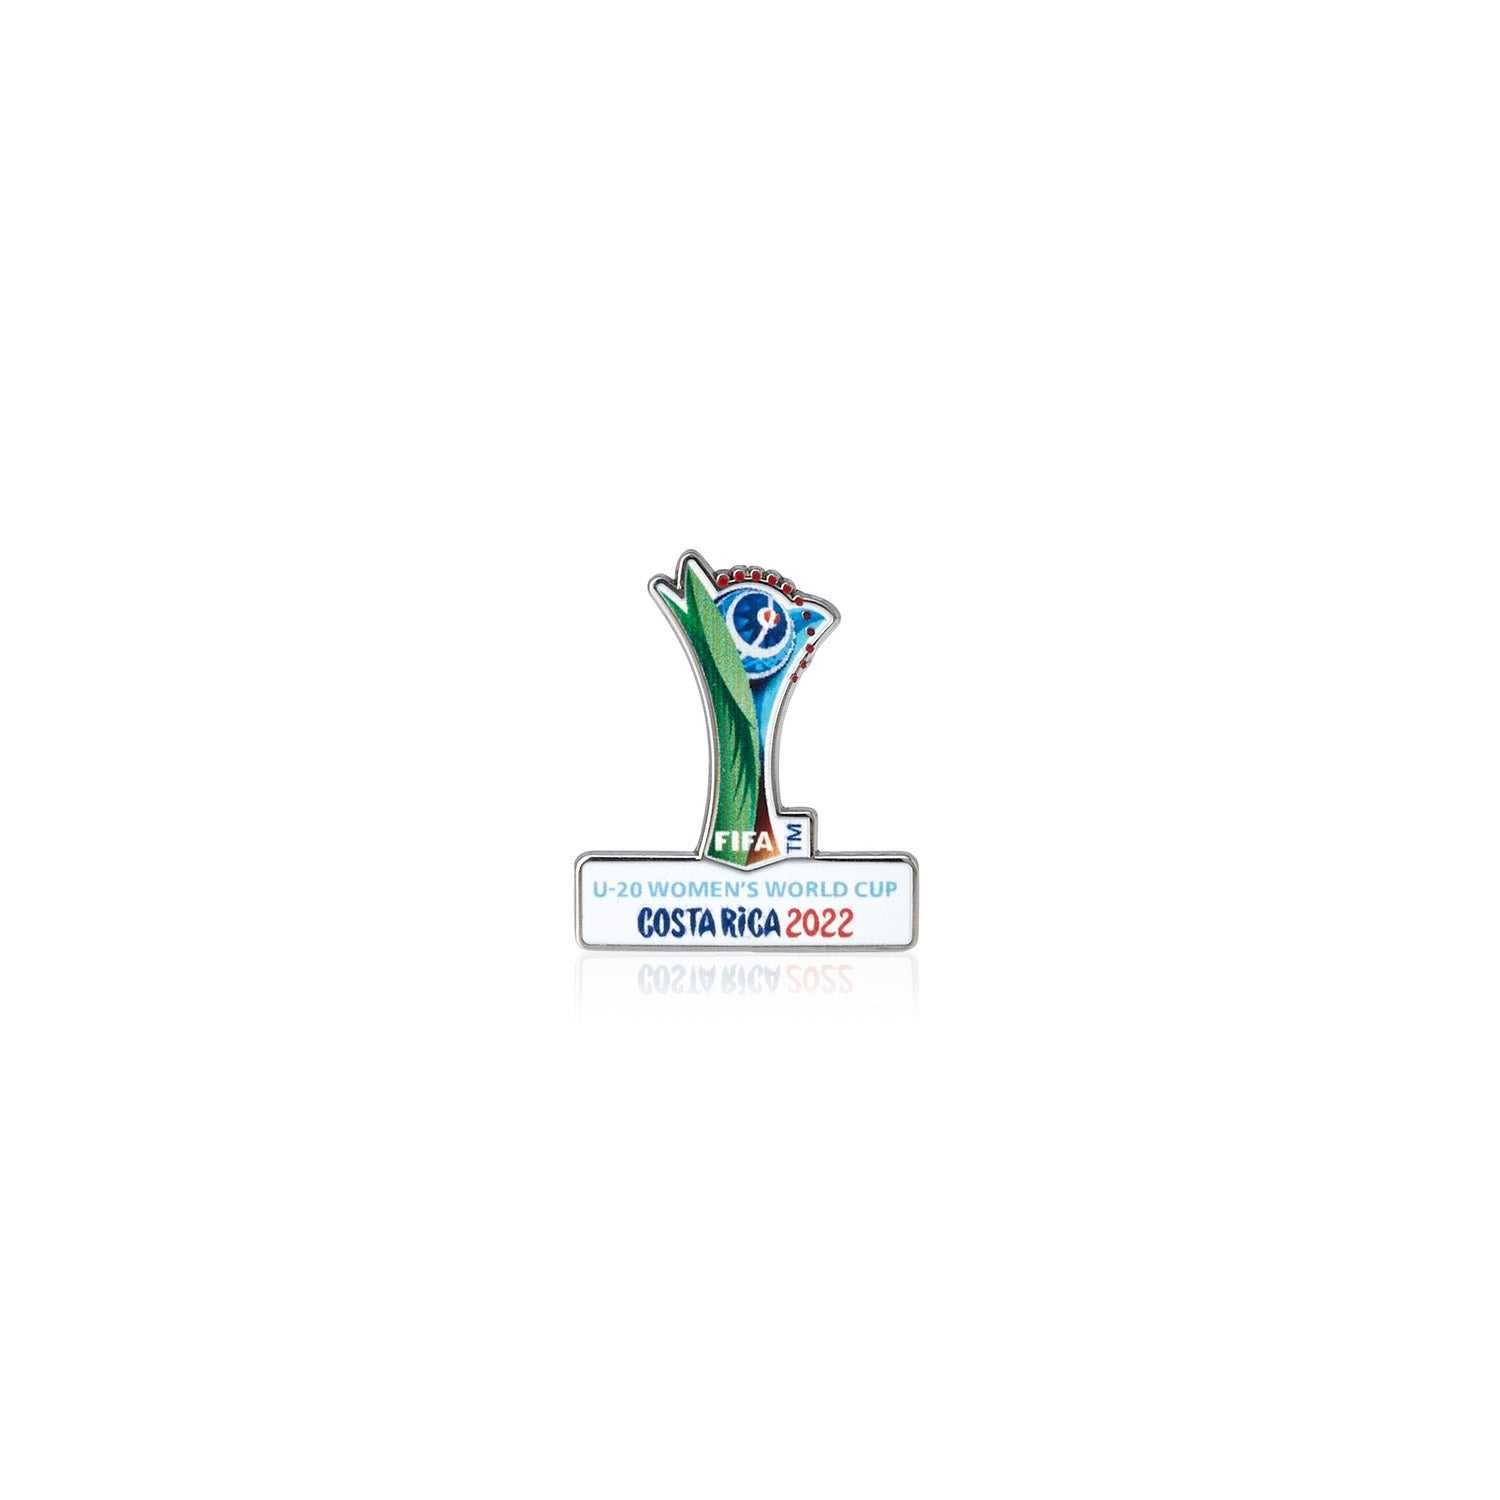 2022 U20 Women's World Cup Costa Rica Lapel Trophy Pin